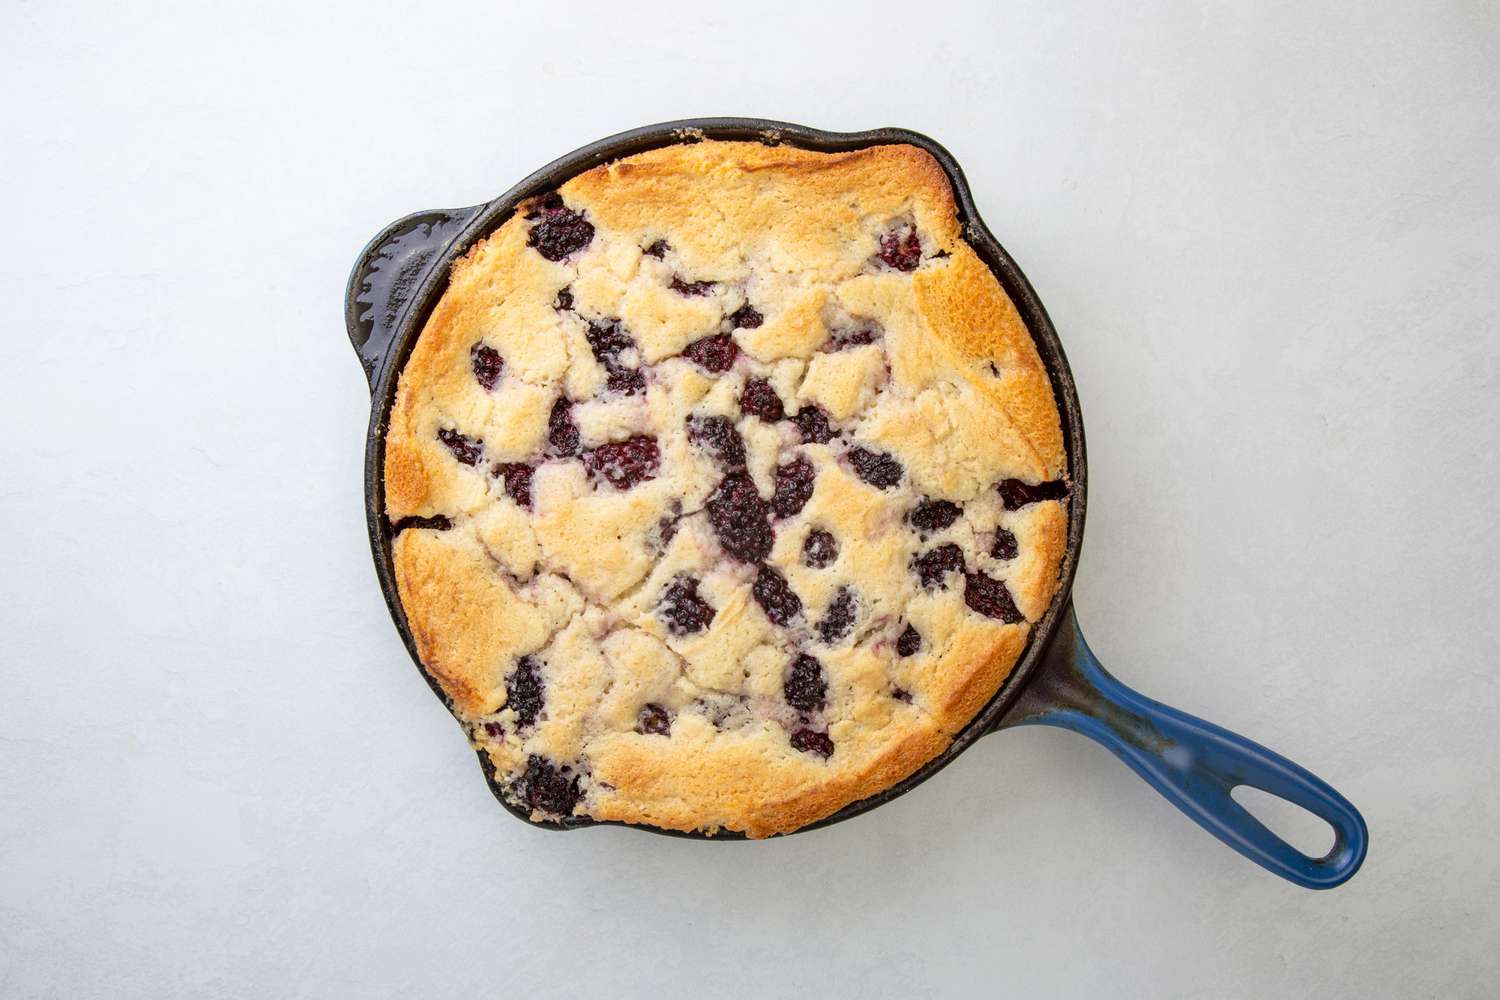 A full baked blackberry cobbler in a cast iron pan